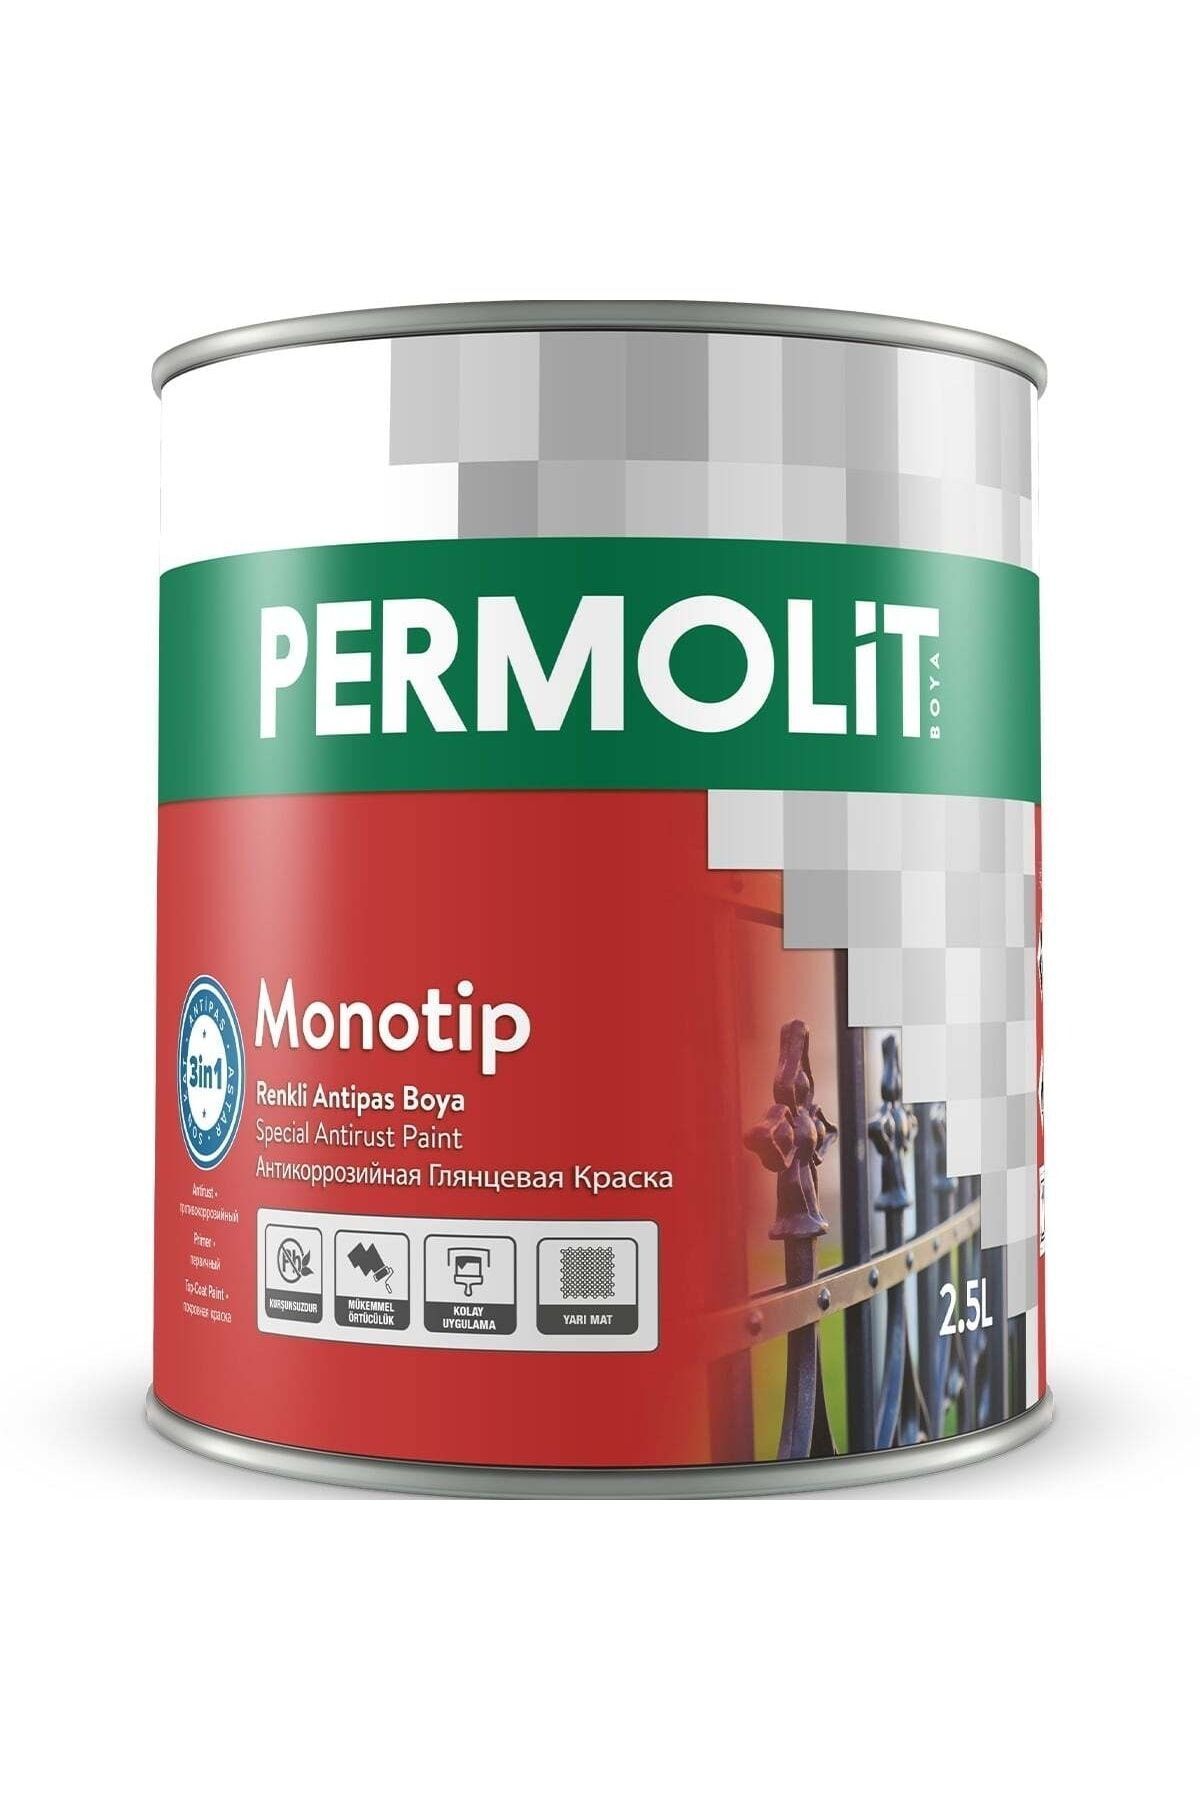 Permolit Monotip (antipas-astar-son Kat) 2,5 Lt